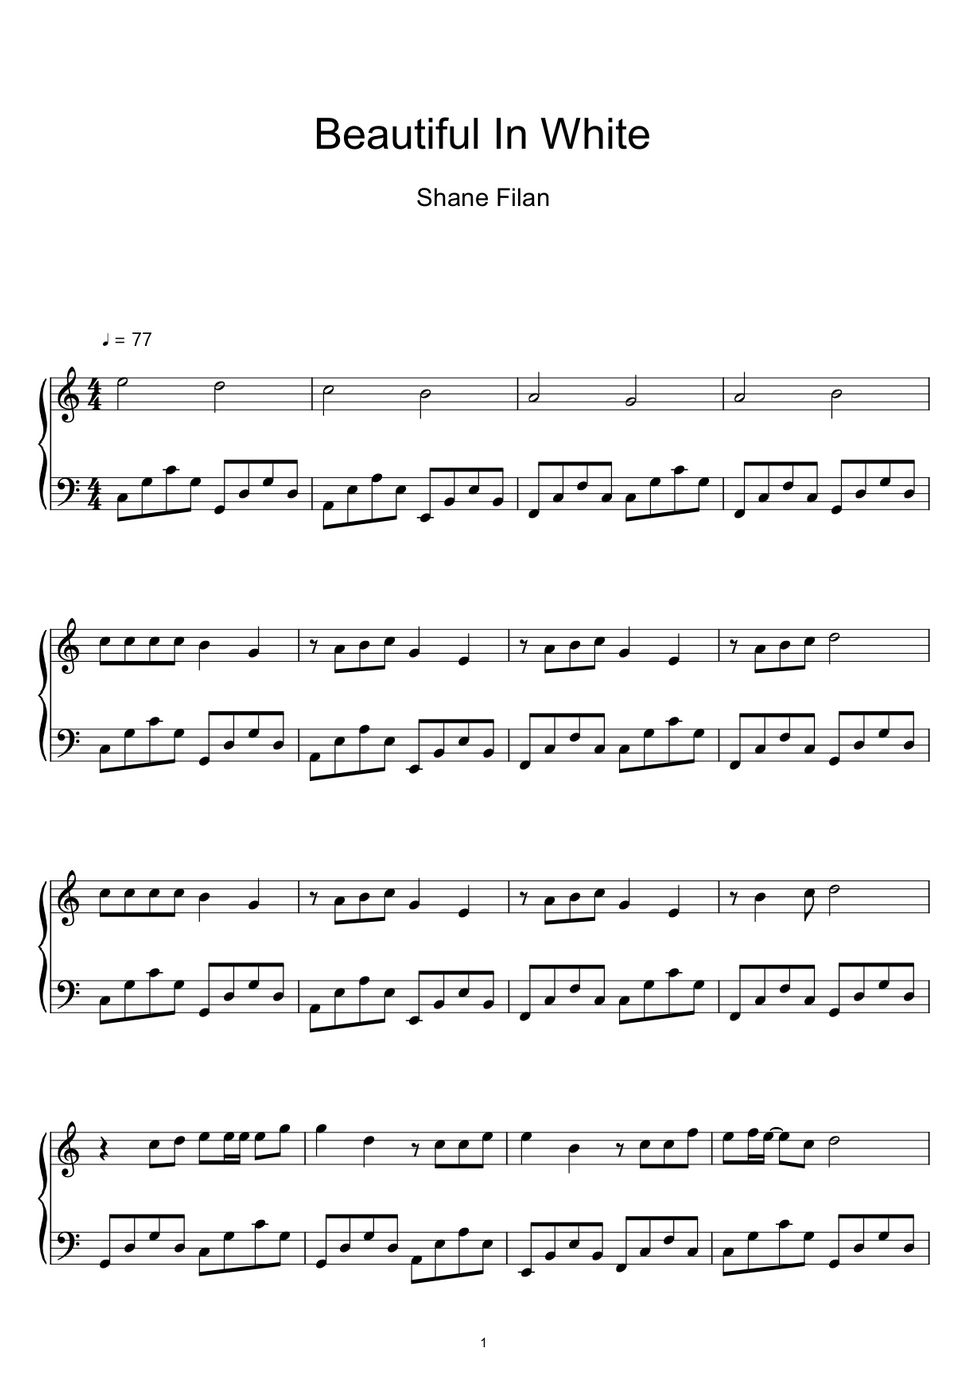 Shane Filan - Beautiful In White (Sheet Music, MIDI,) by sayu